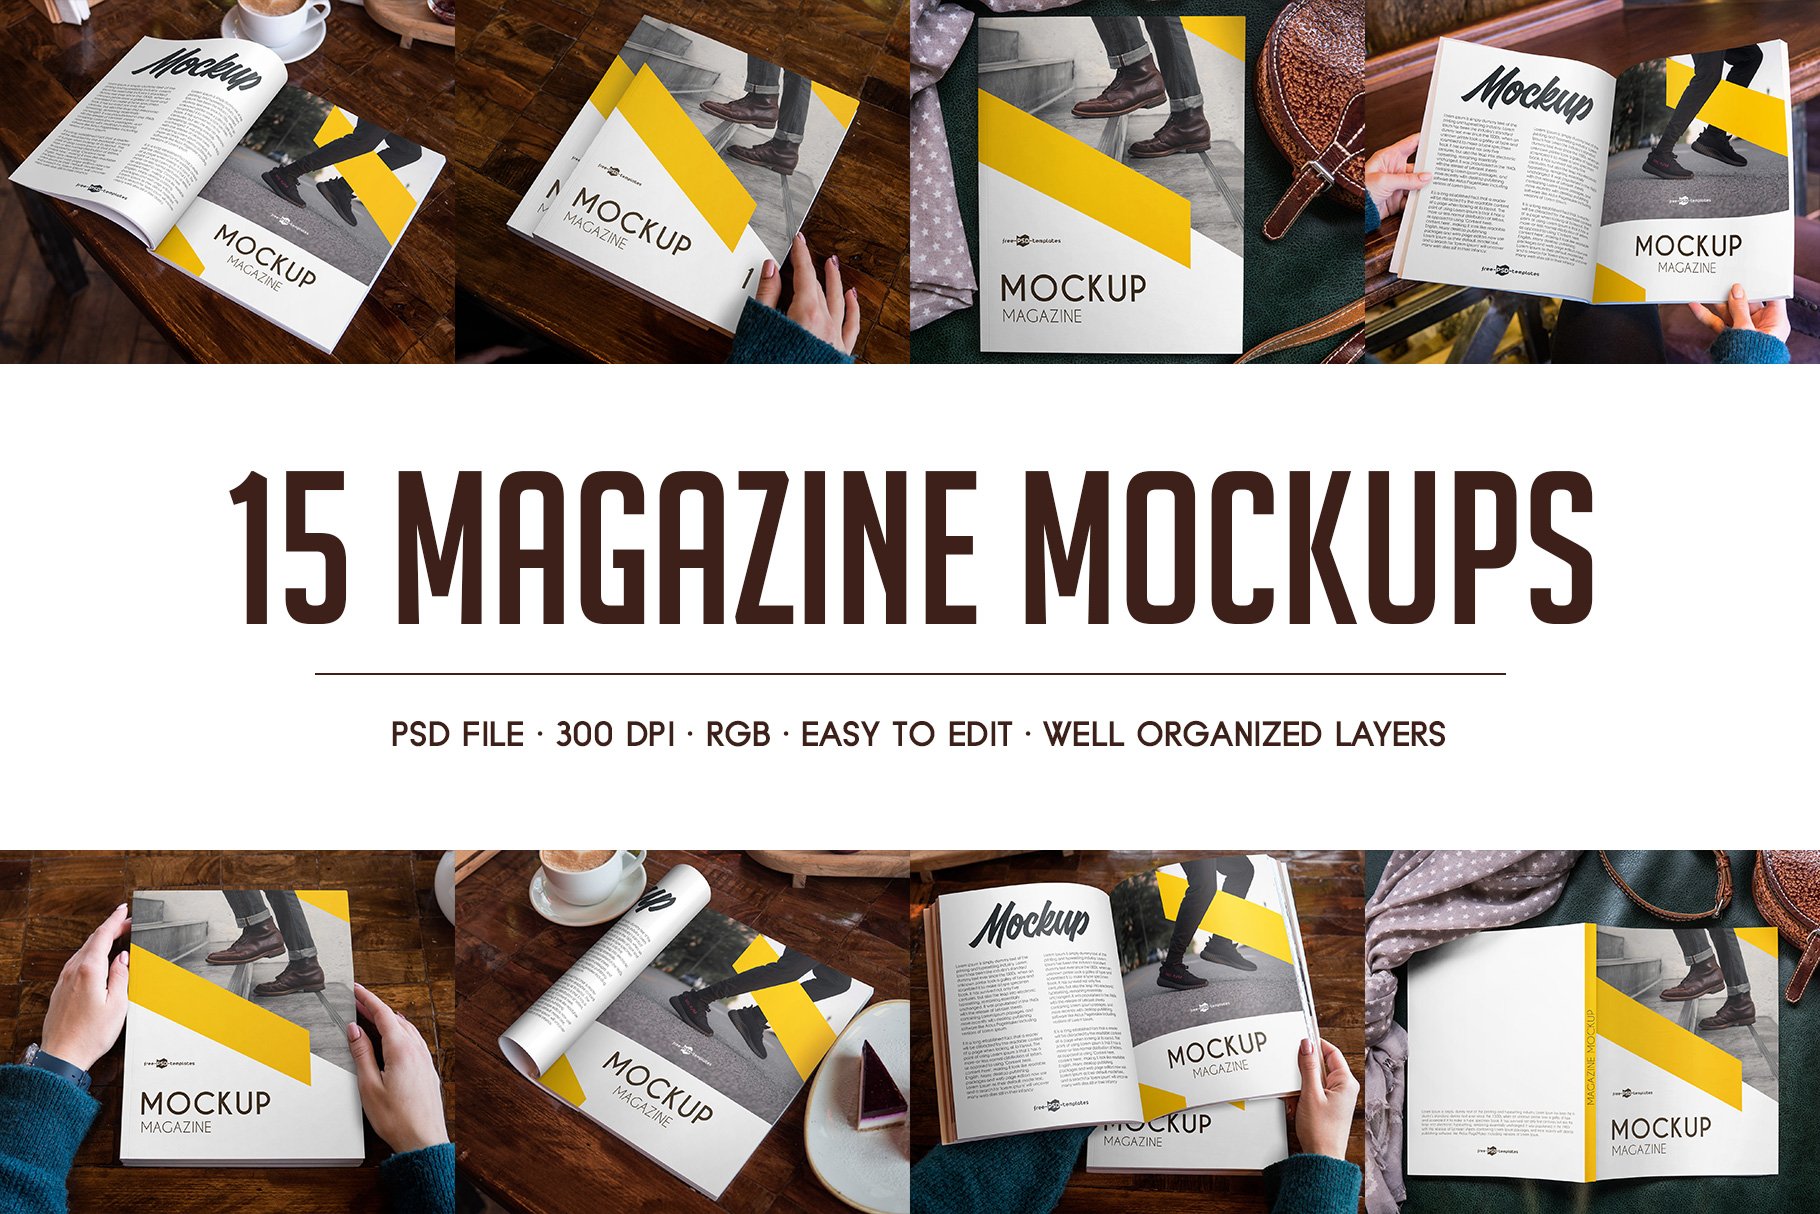 15 Magazine MockUps cover image.